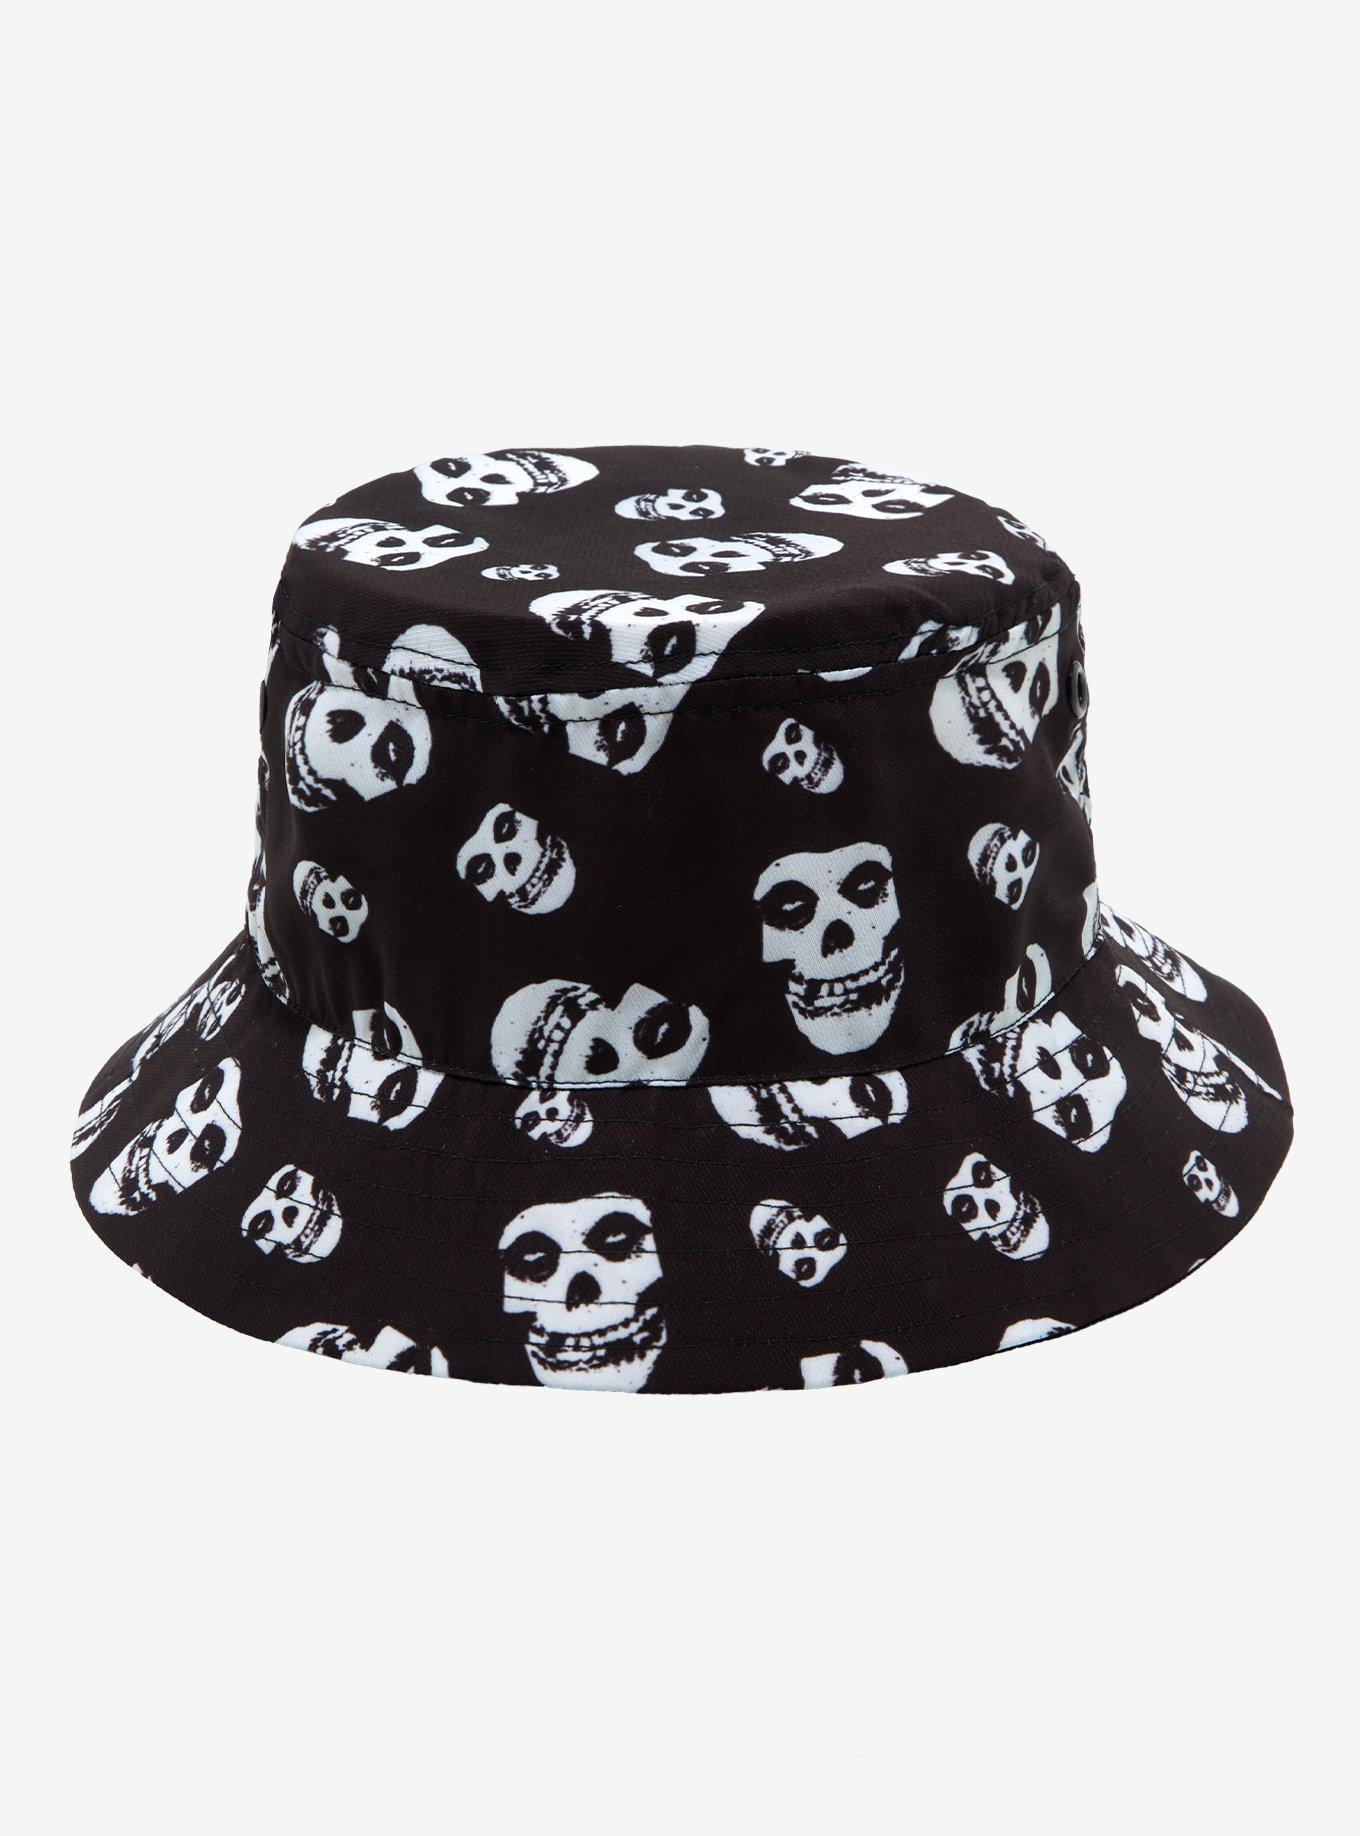 The Misfits Fiend Skull Bucket Hat